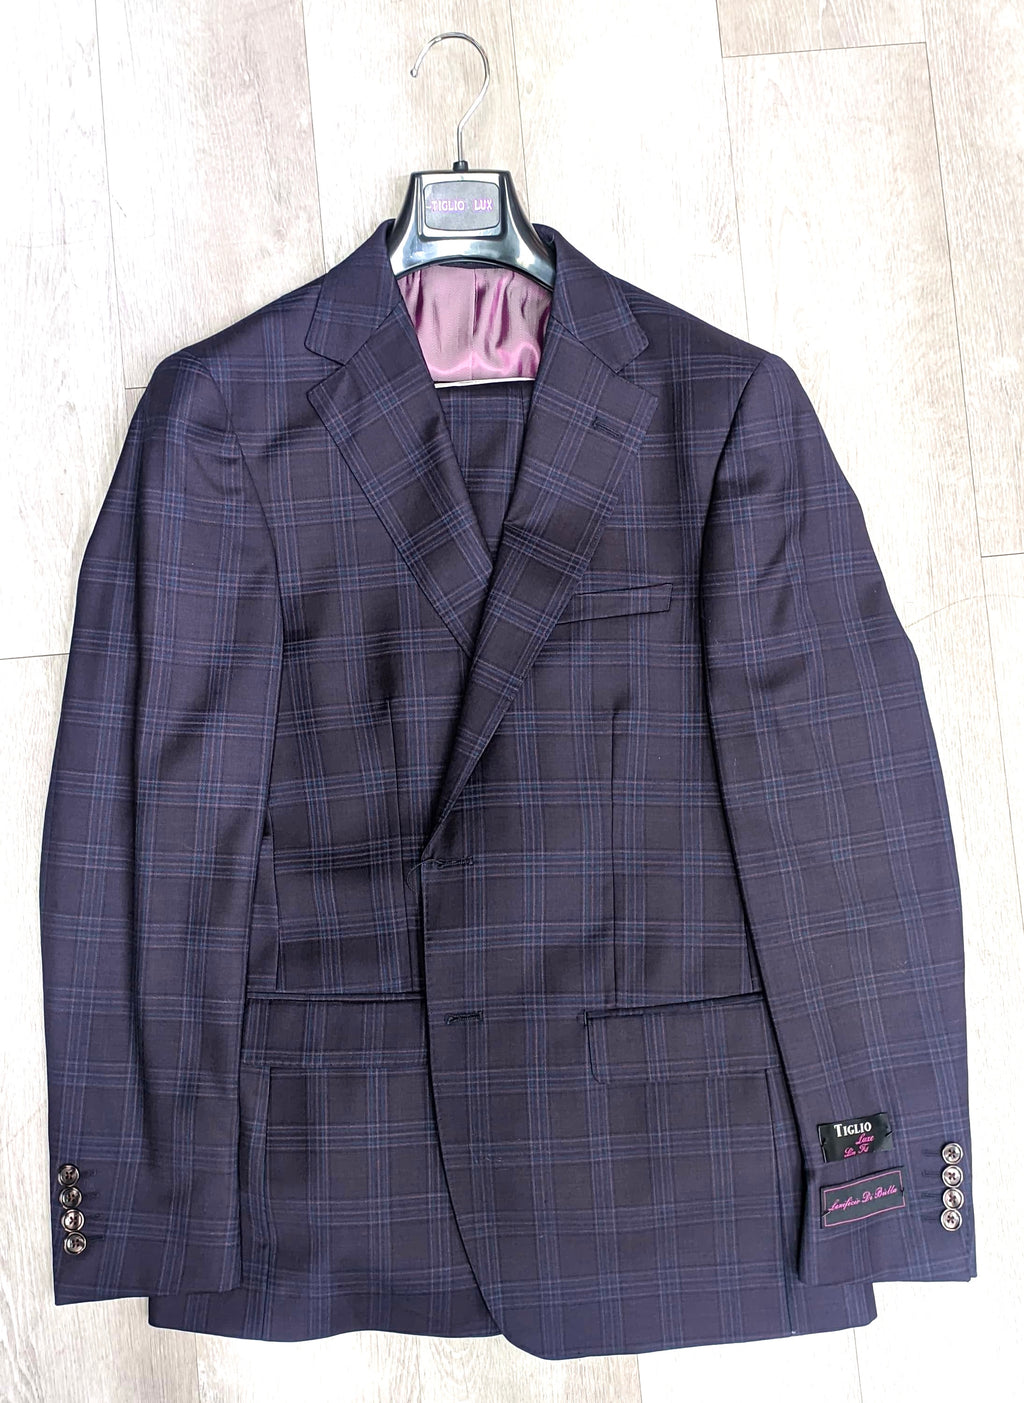 Tiglio Luxe Porto Slim Fit Plum Windowpane Suit TL3175 (SIZE 46R ONLY)